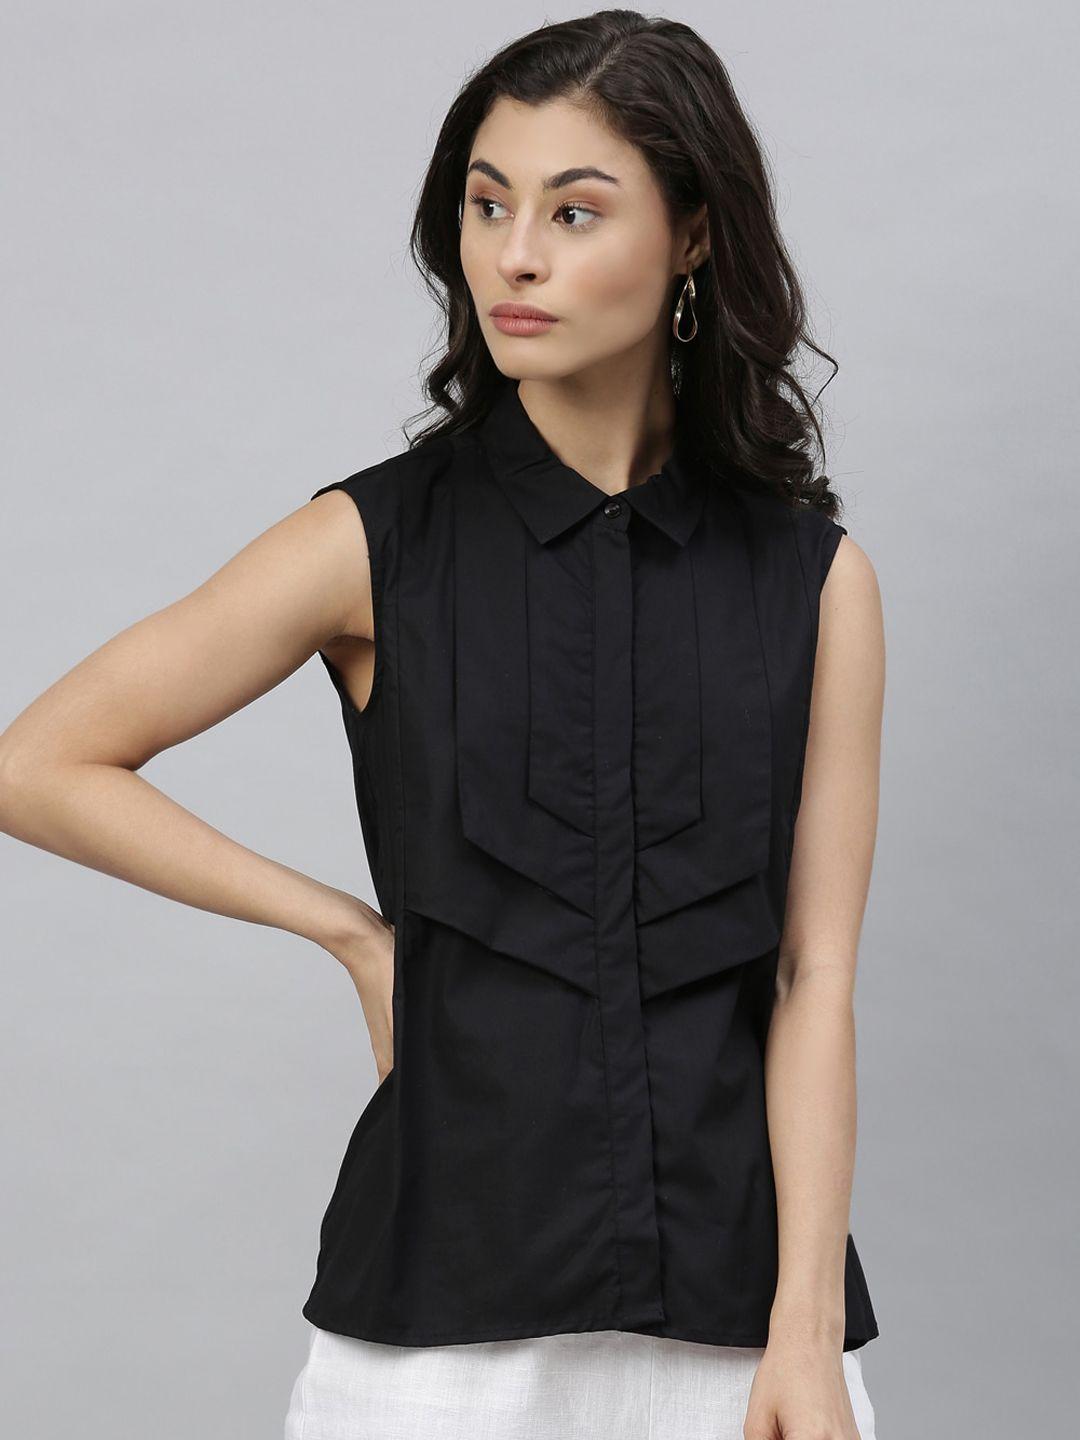 rareism-women-black-solid-shirt-style-top